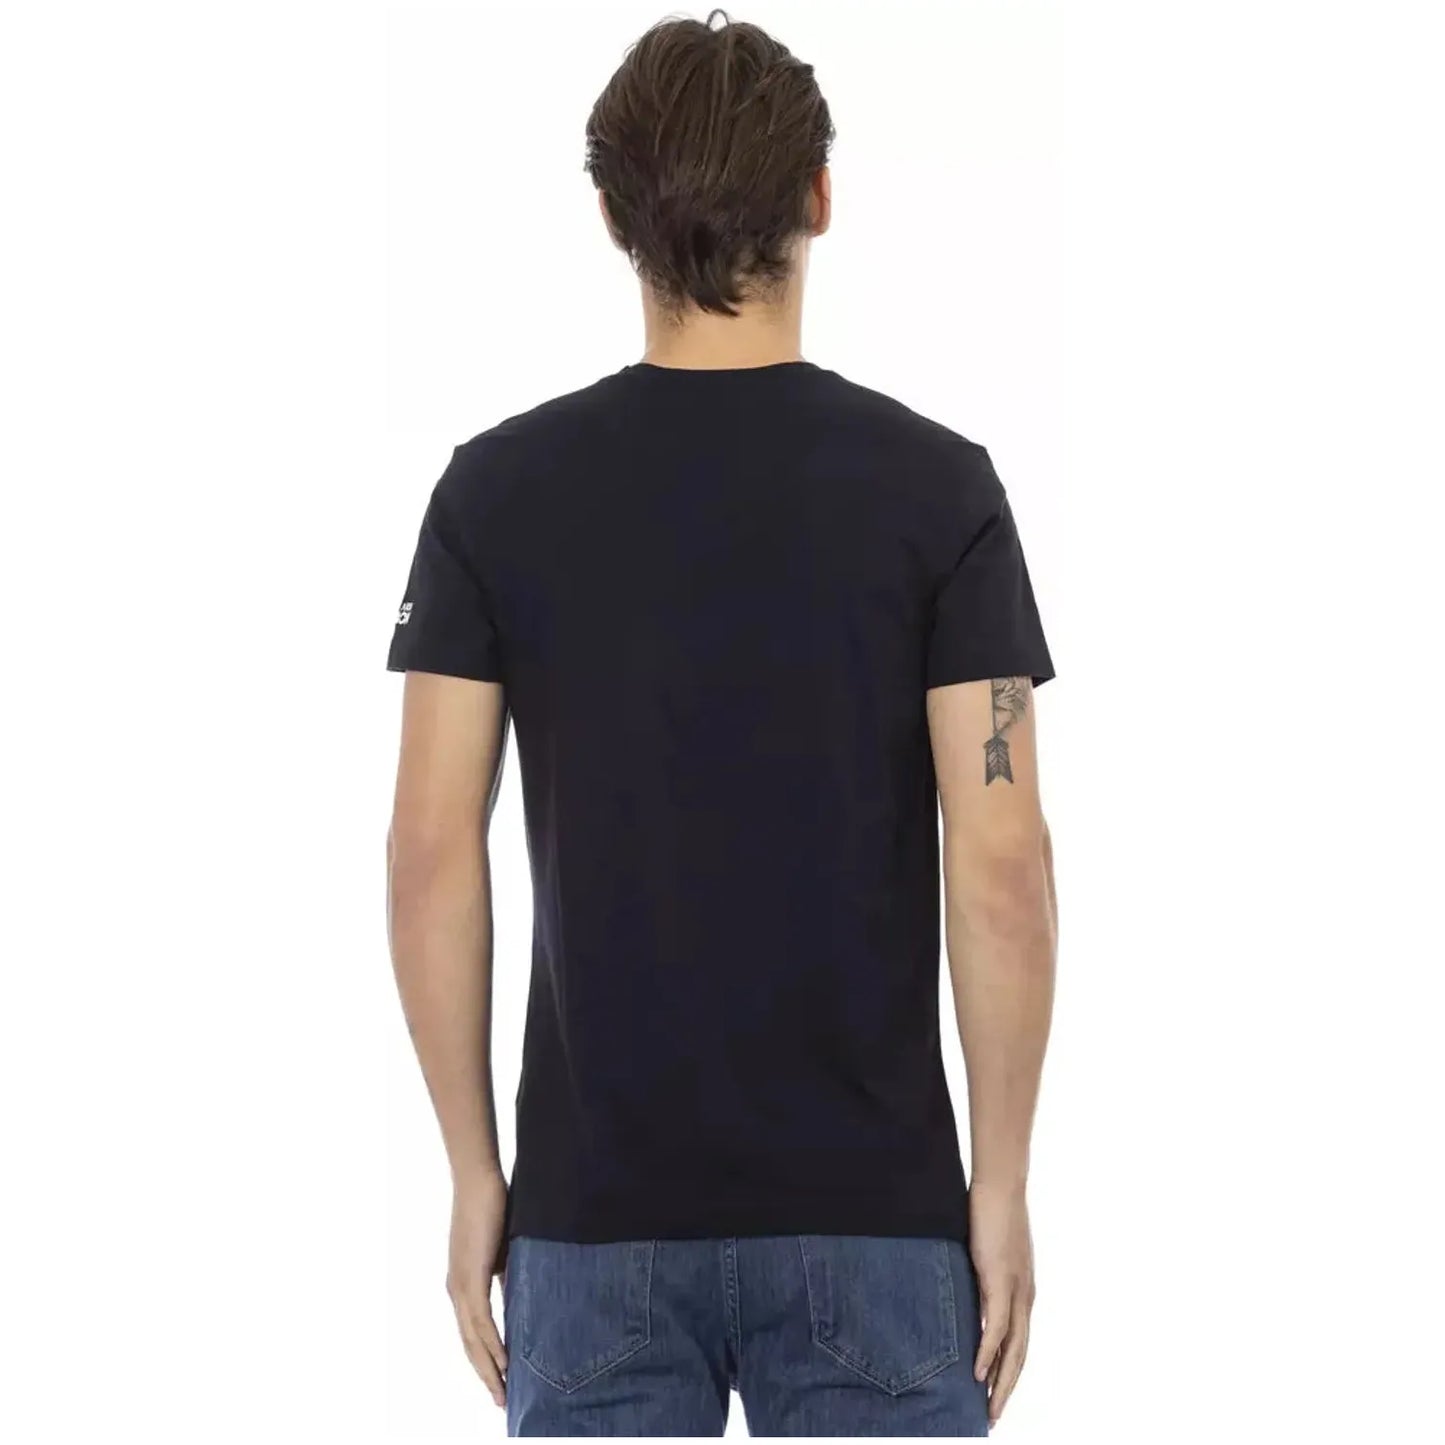 Trussardi Action Elegant V-Neck Tee with Front Print black-cotton-t-shirt-27